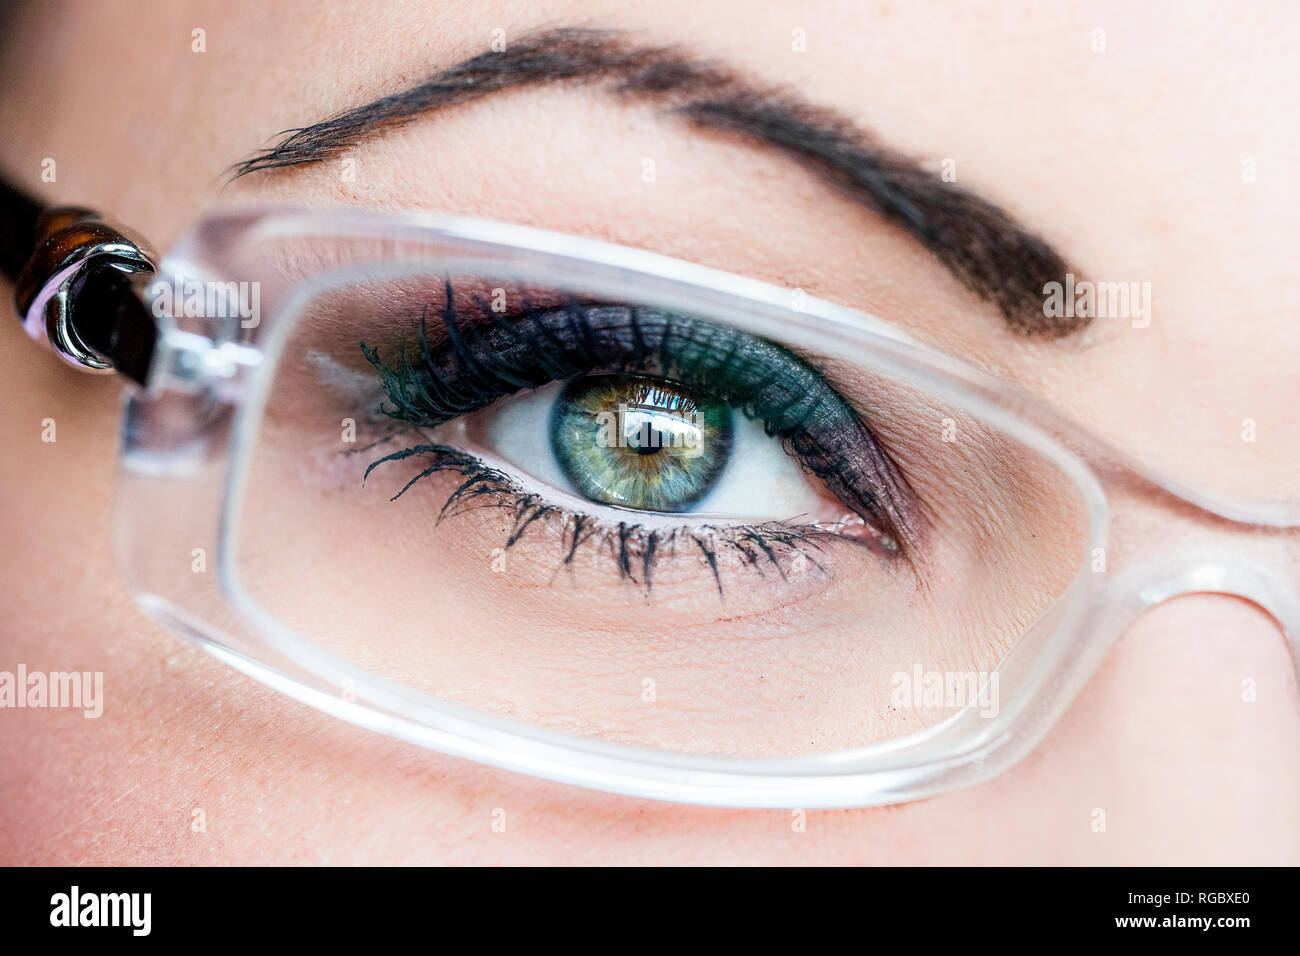 Woman's eye, glasses, close-up Stock Photo